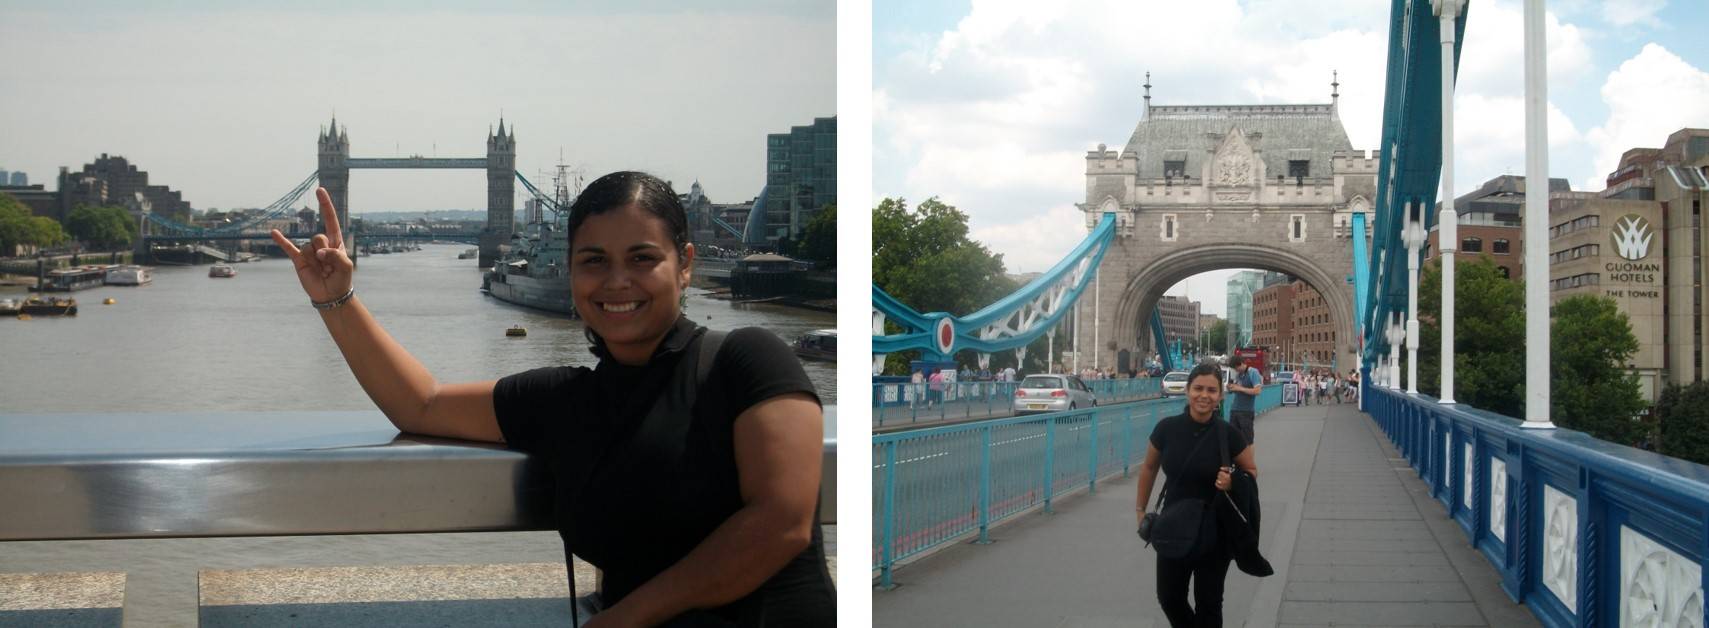 My Visit to London Bridge and Tower Bridge